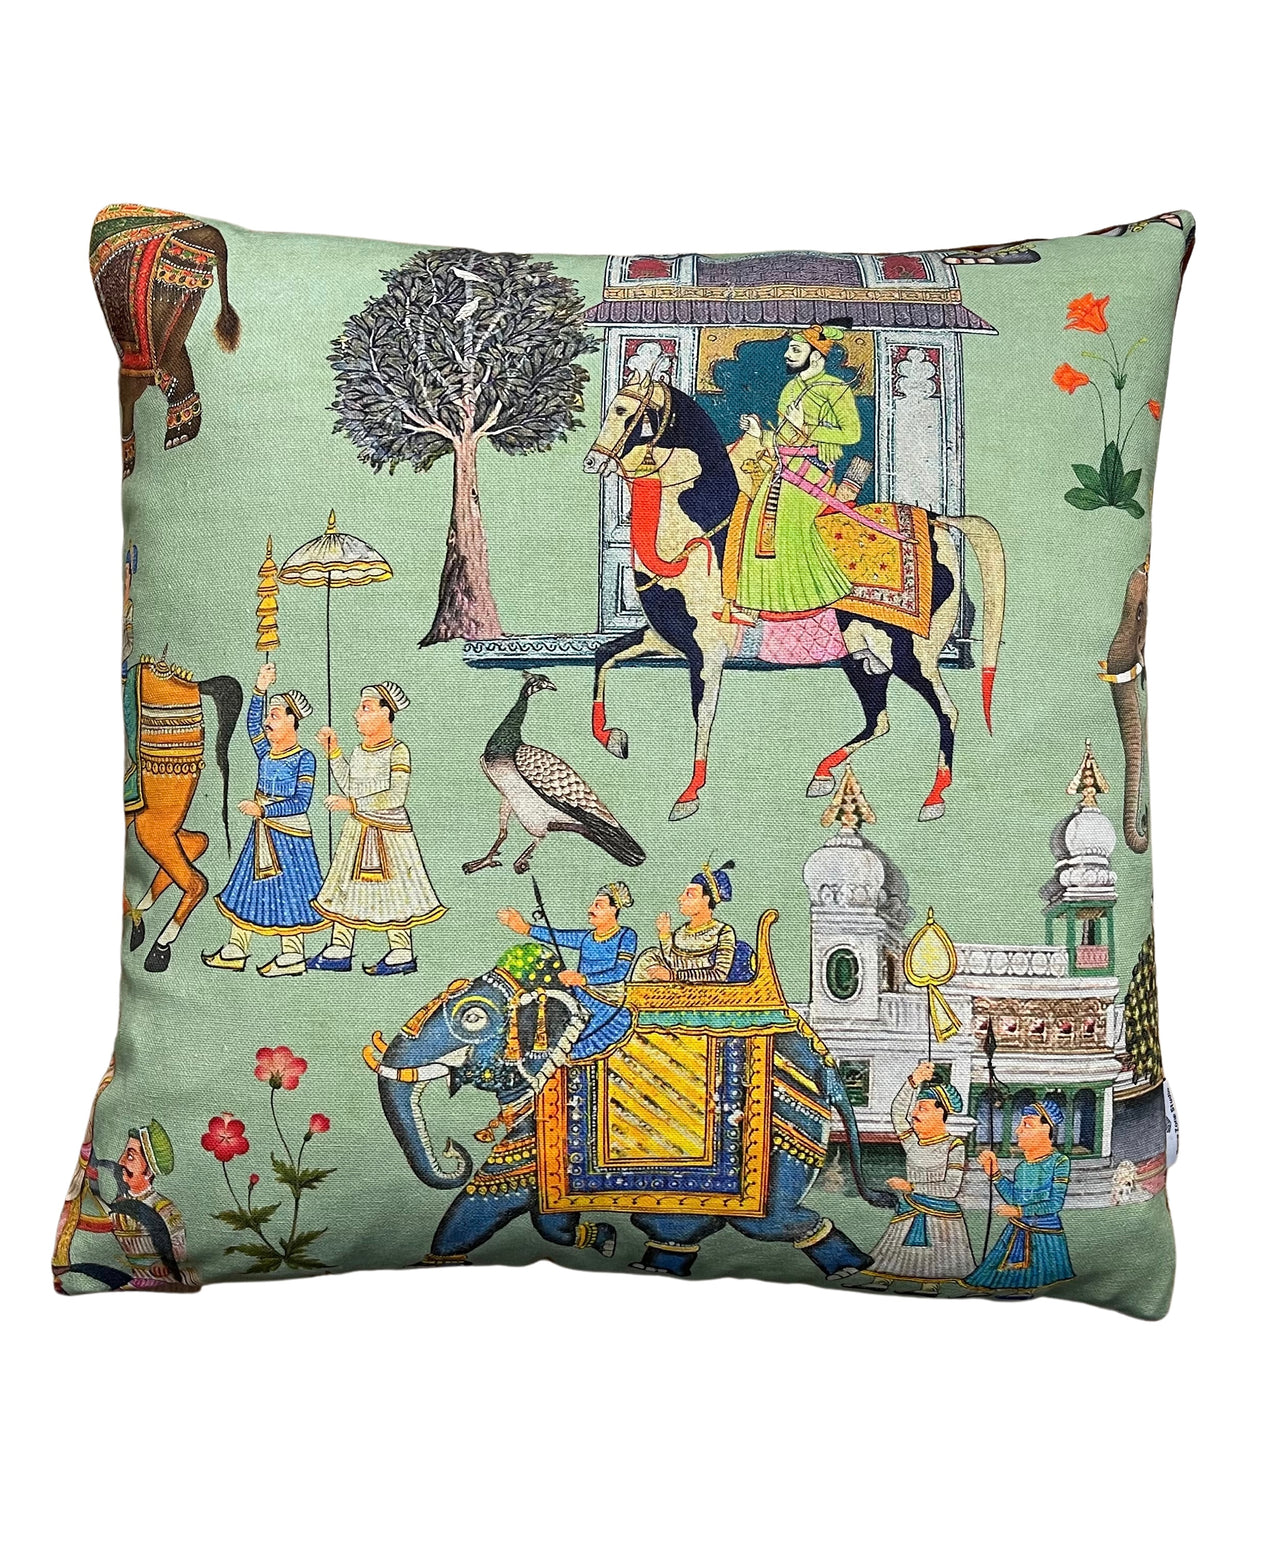 Indian-Inspired Green Cushion Cover with Maharaja Horses, Elephants, Trees, and Peacocks